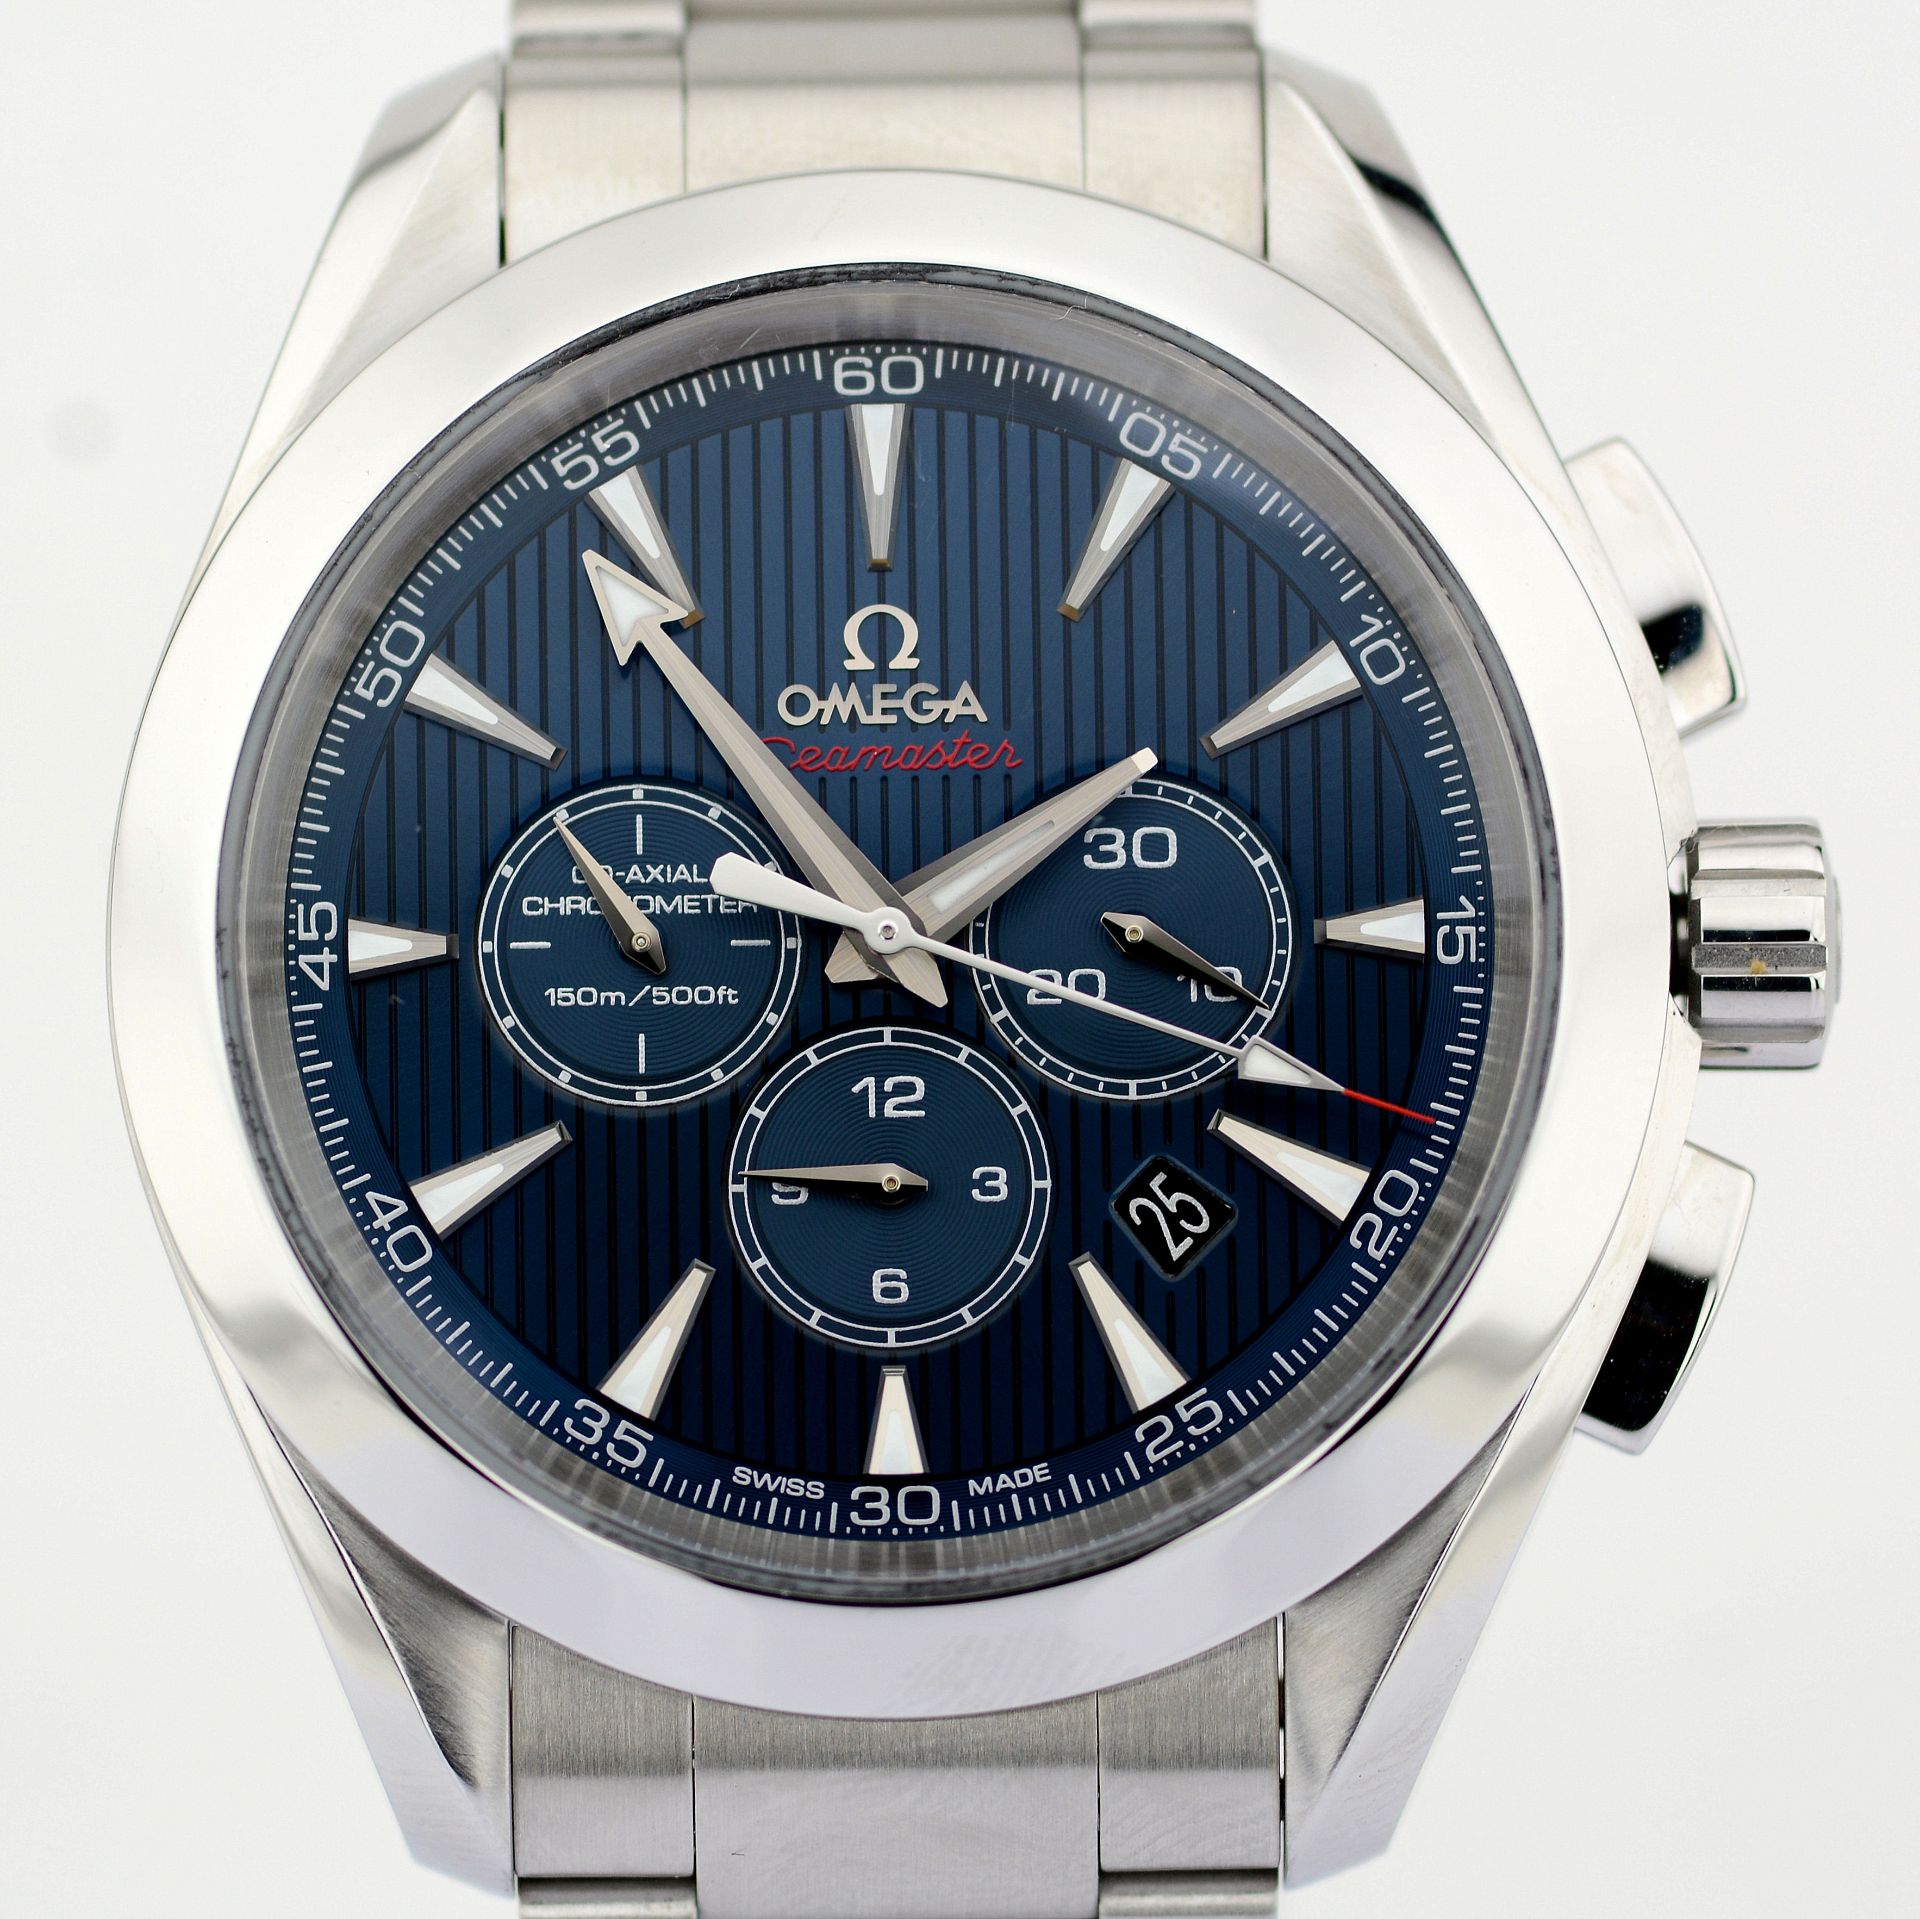 Omega / Seamaster Aqua Terra 44mm Chronograph London Olympics - Gentlmen's Steel Wrist Watch